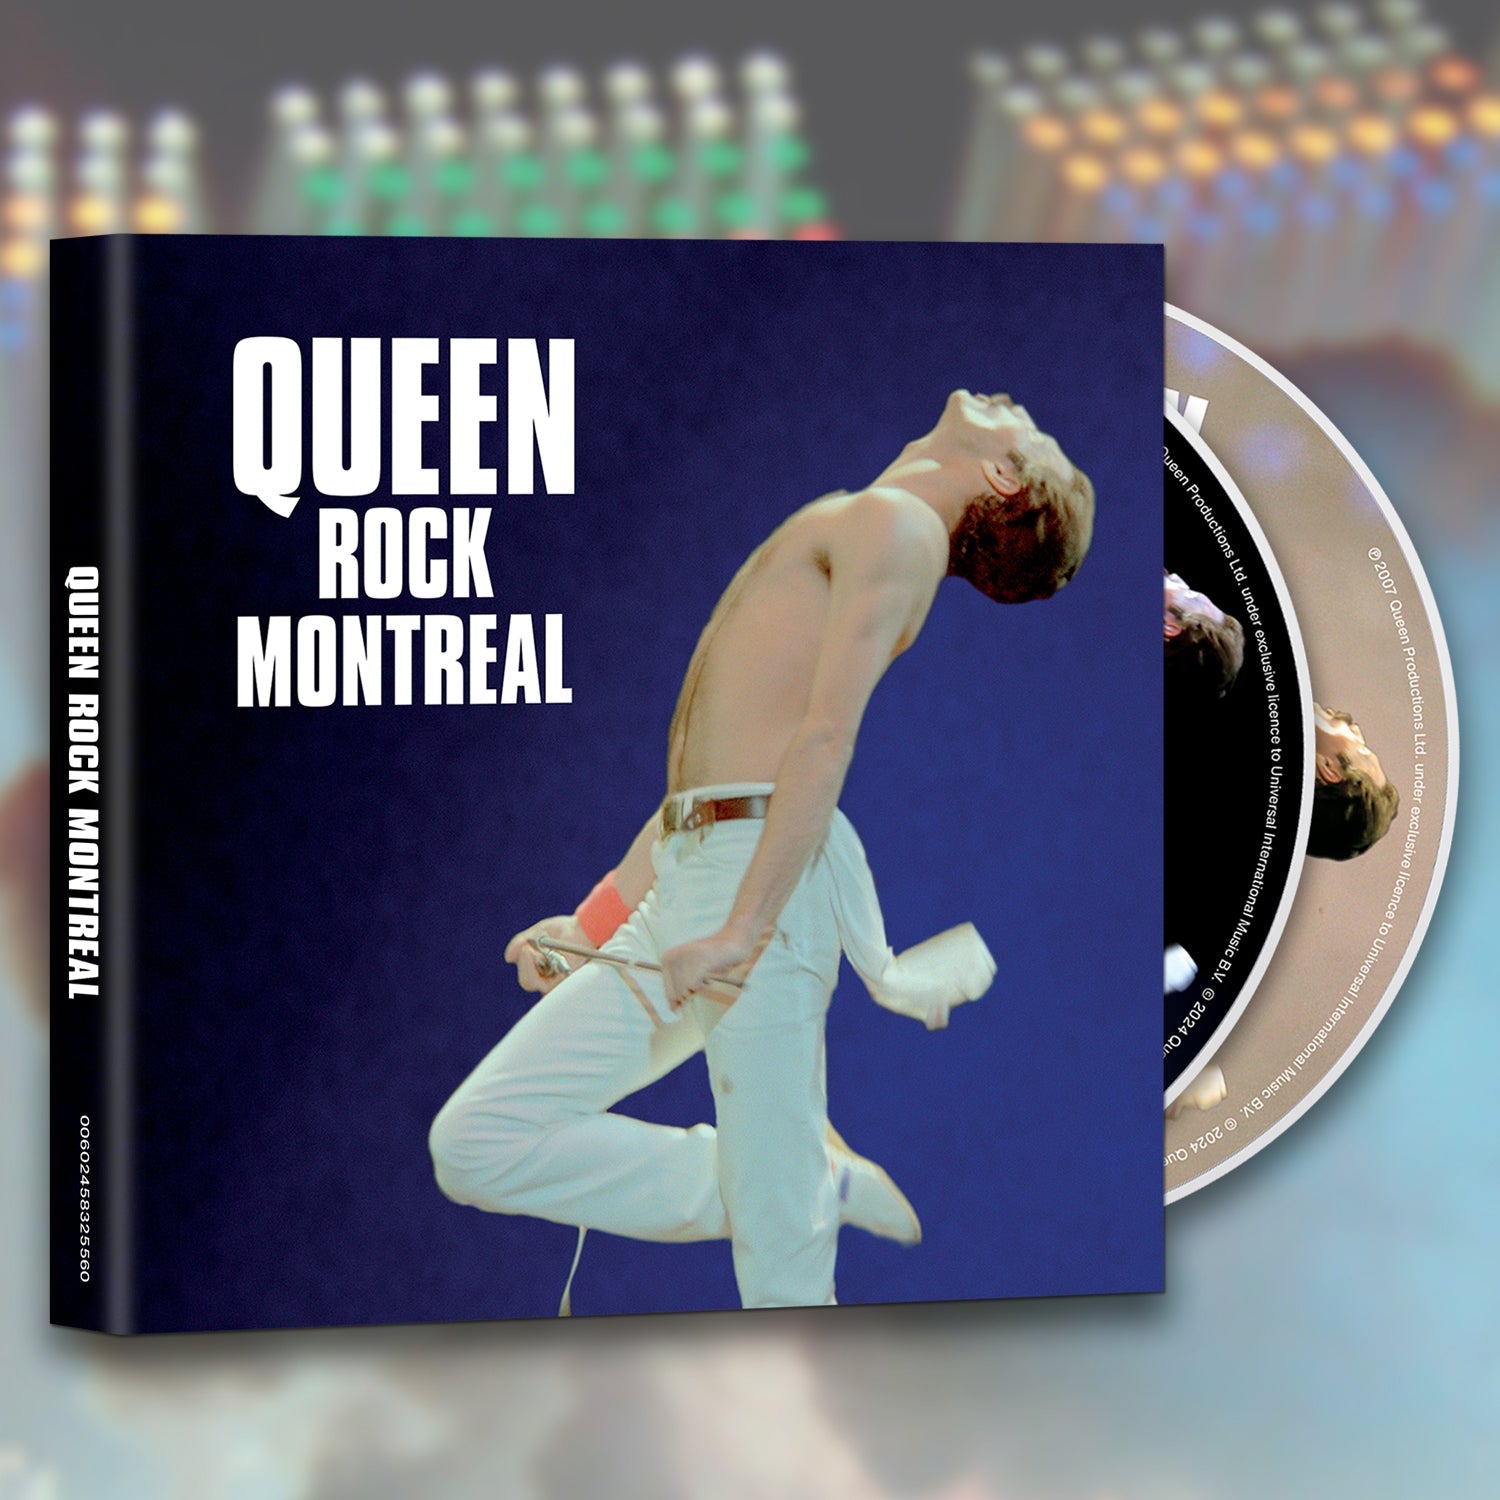 Rock Montreal Blu-ray, Double CD & Coloured Vinyl.